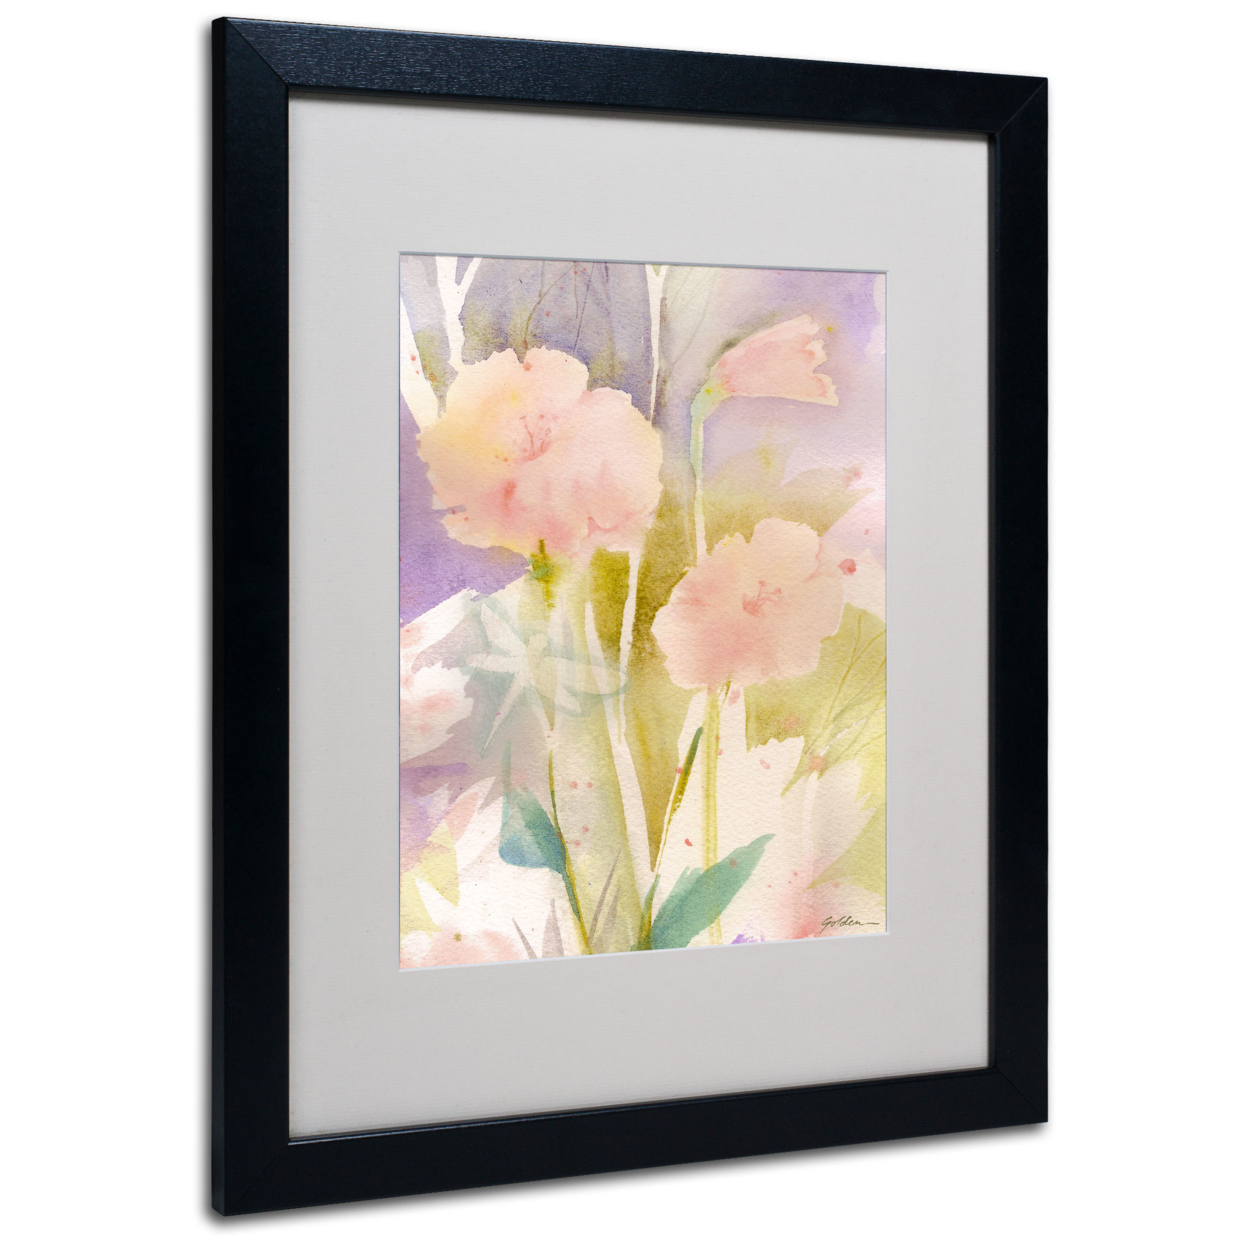 Sheila Golden 'Pink Dragonfly Shadows' Black Wooden Framed Art 18 X 22 Inches